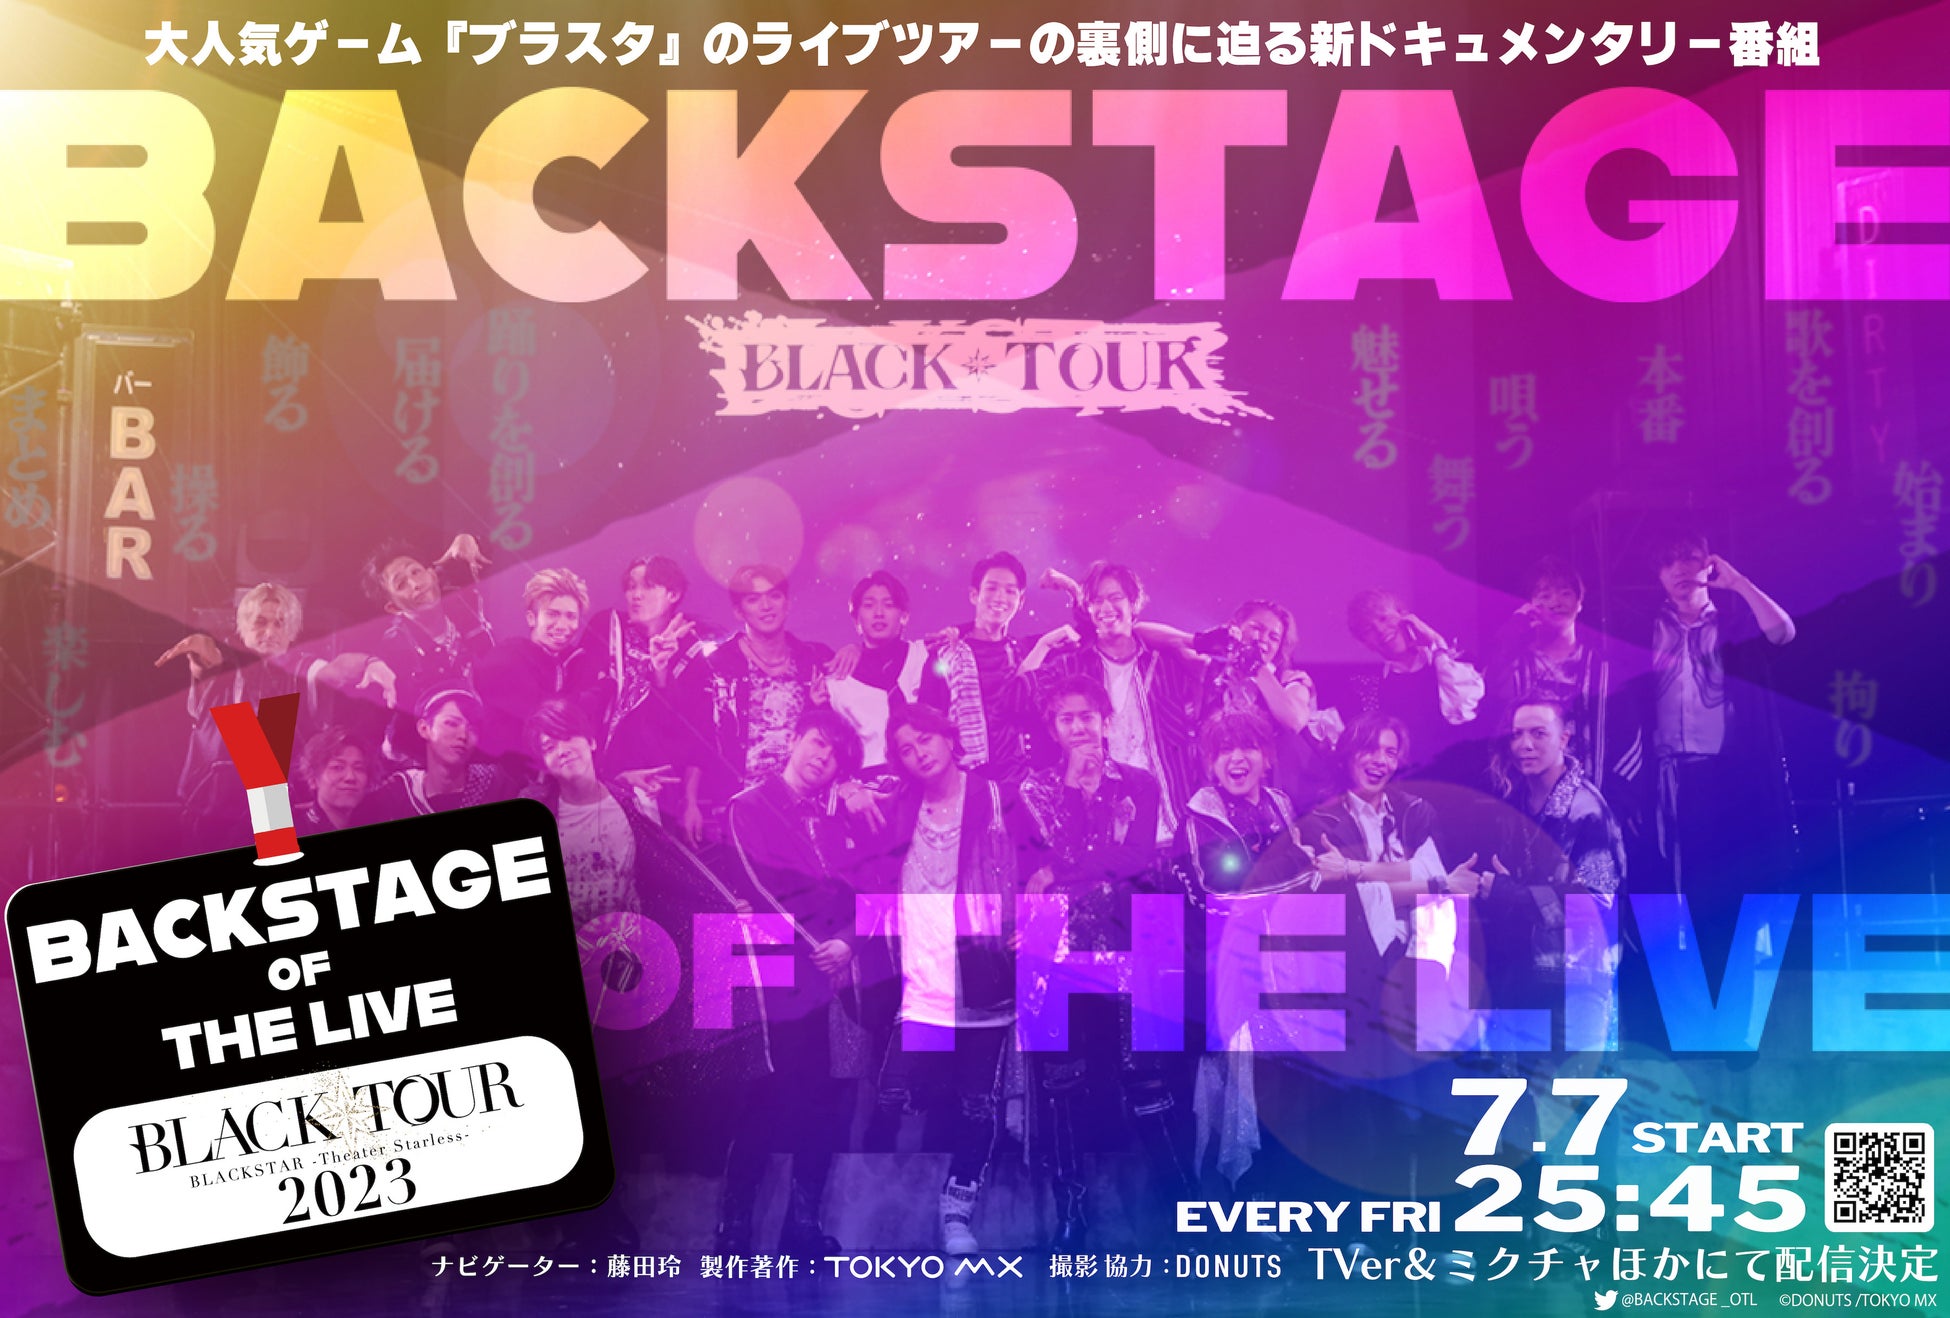 TOKYO MX新ドキュメンタリー番組「BACKSTAGE OF THE LIVE」がDONUTSの人気スマホゲーム『ブラスタ』のライブツアーを密着取材！7月7日(金)より毎週金曜25:45放送開始！